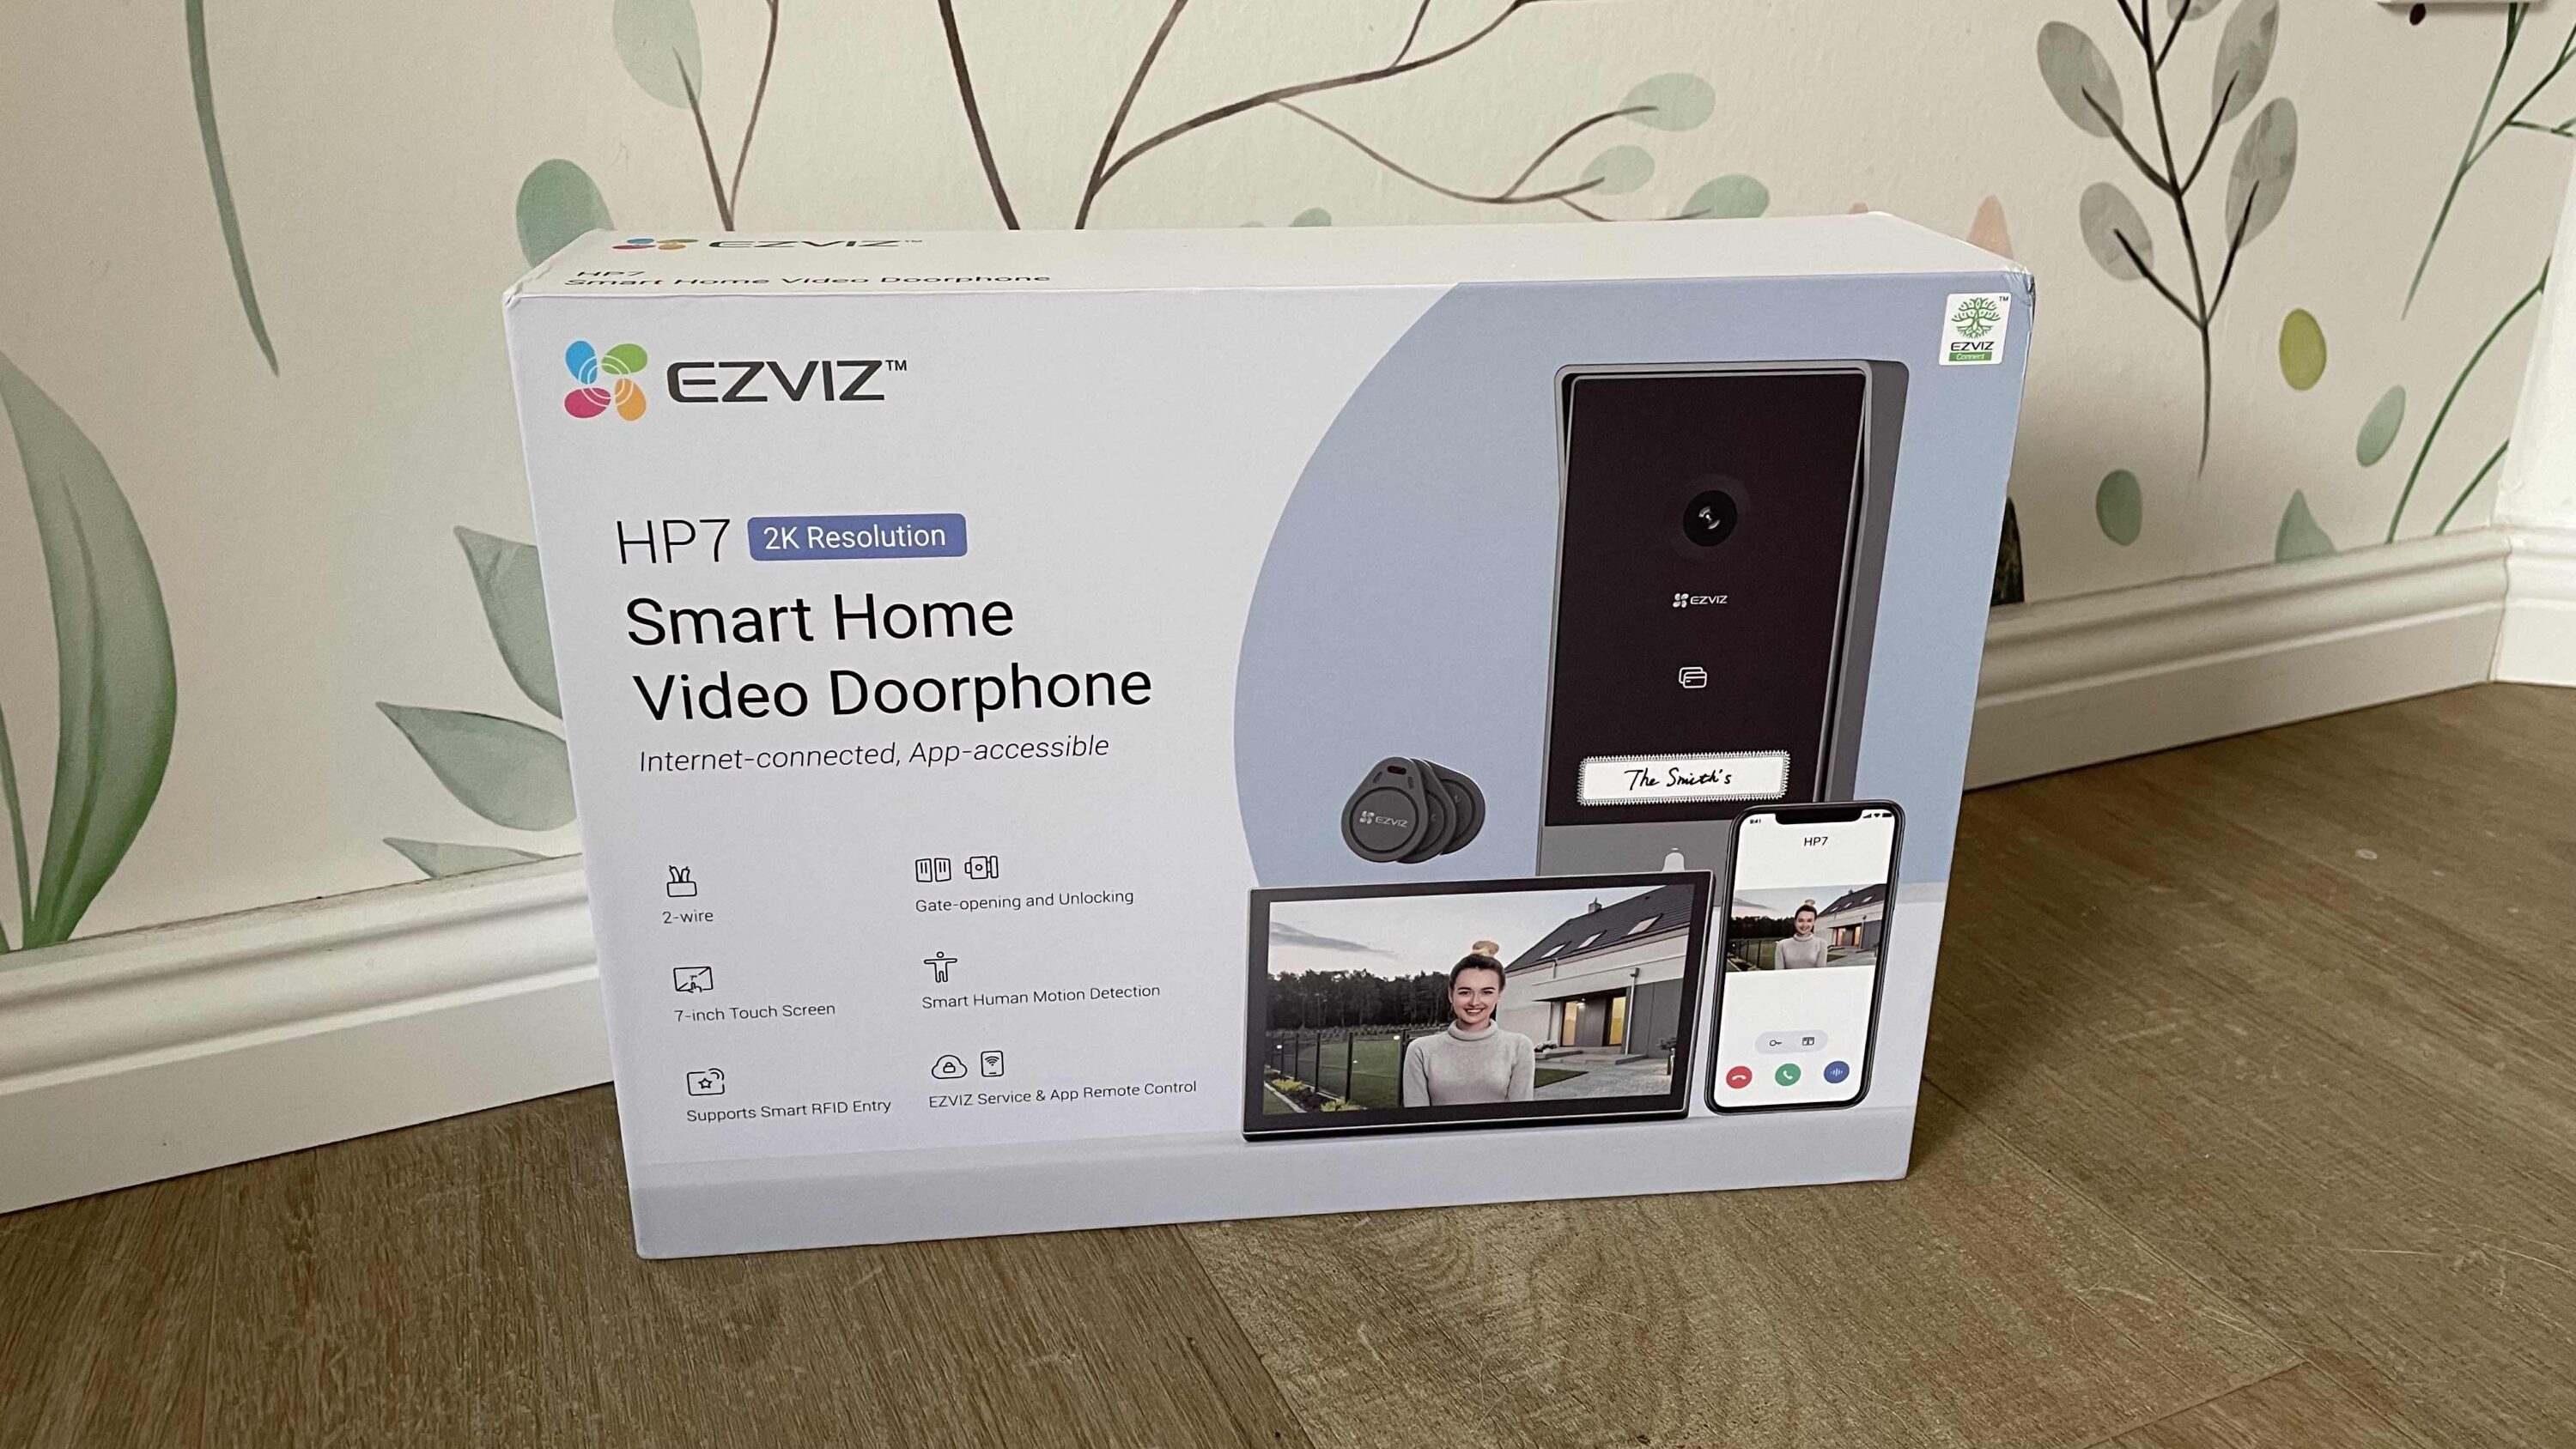 Ezviz HP7 Smart Home Video Doorphone - Smart Intercom Screen and